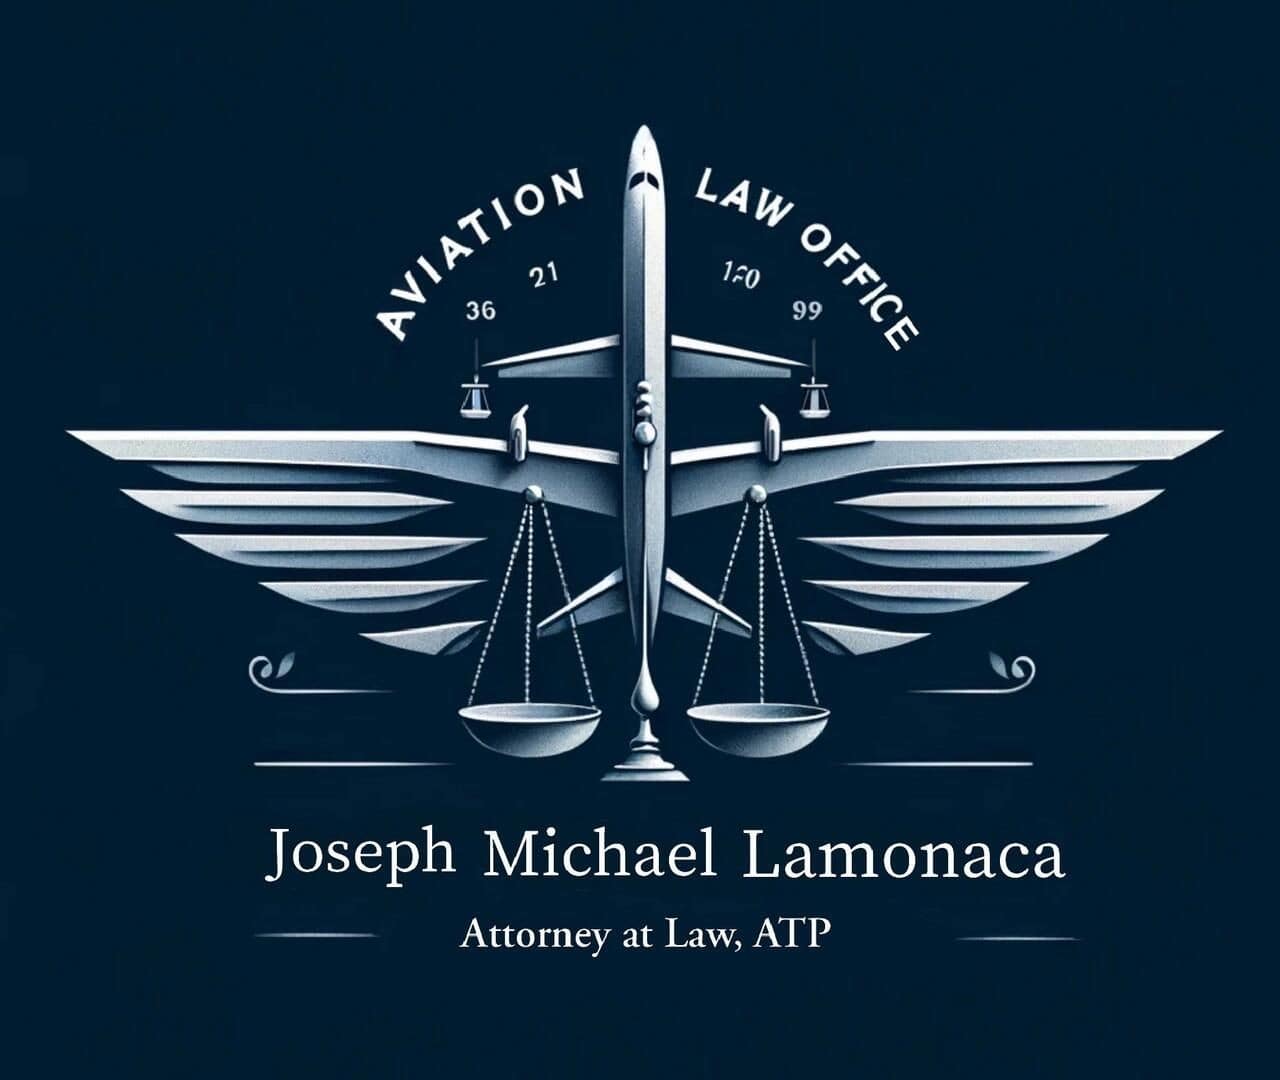 National and International Aviation Law Office of Joseph Michael Lamnonaca, Attorney at Law, ATP